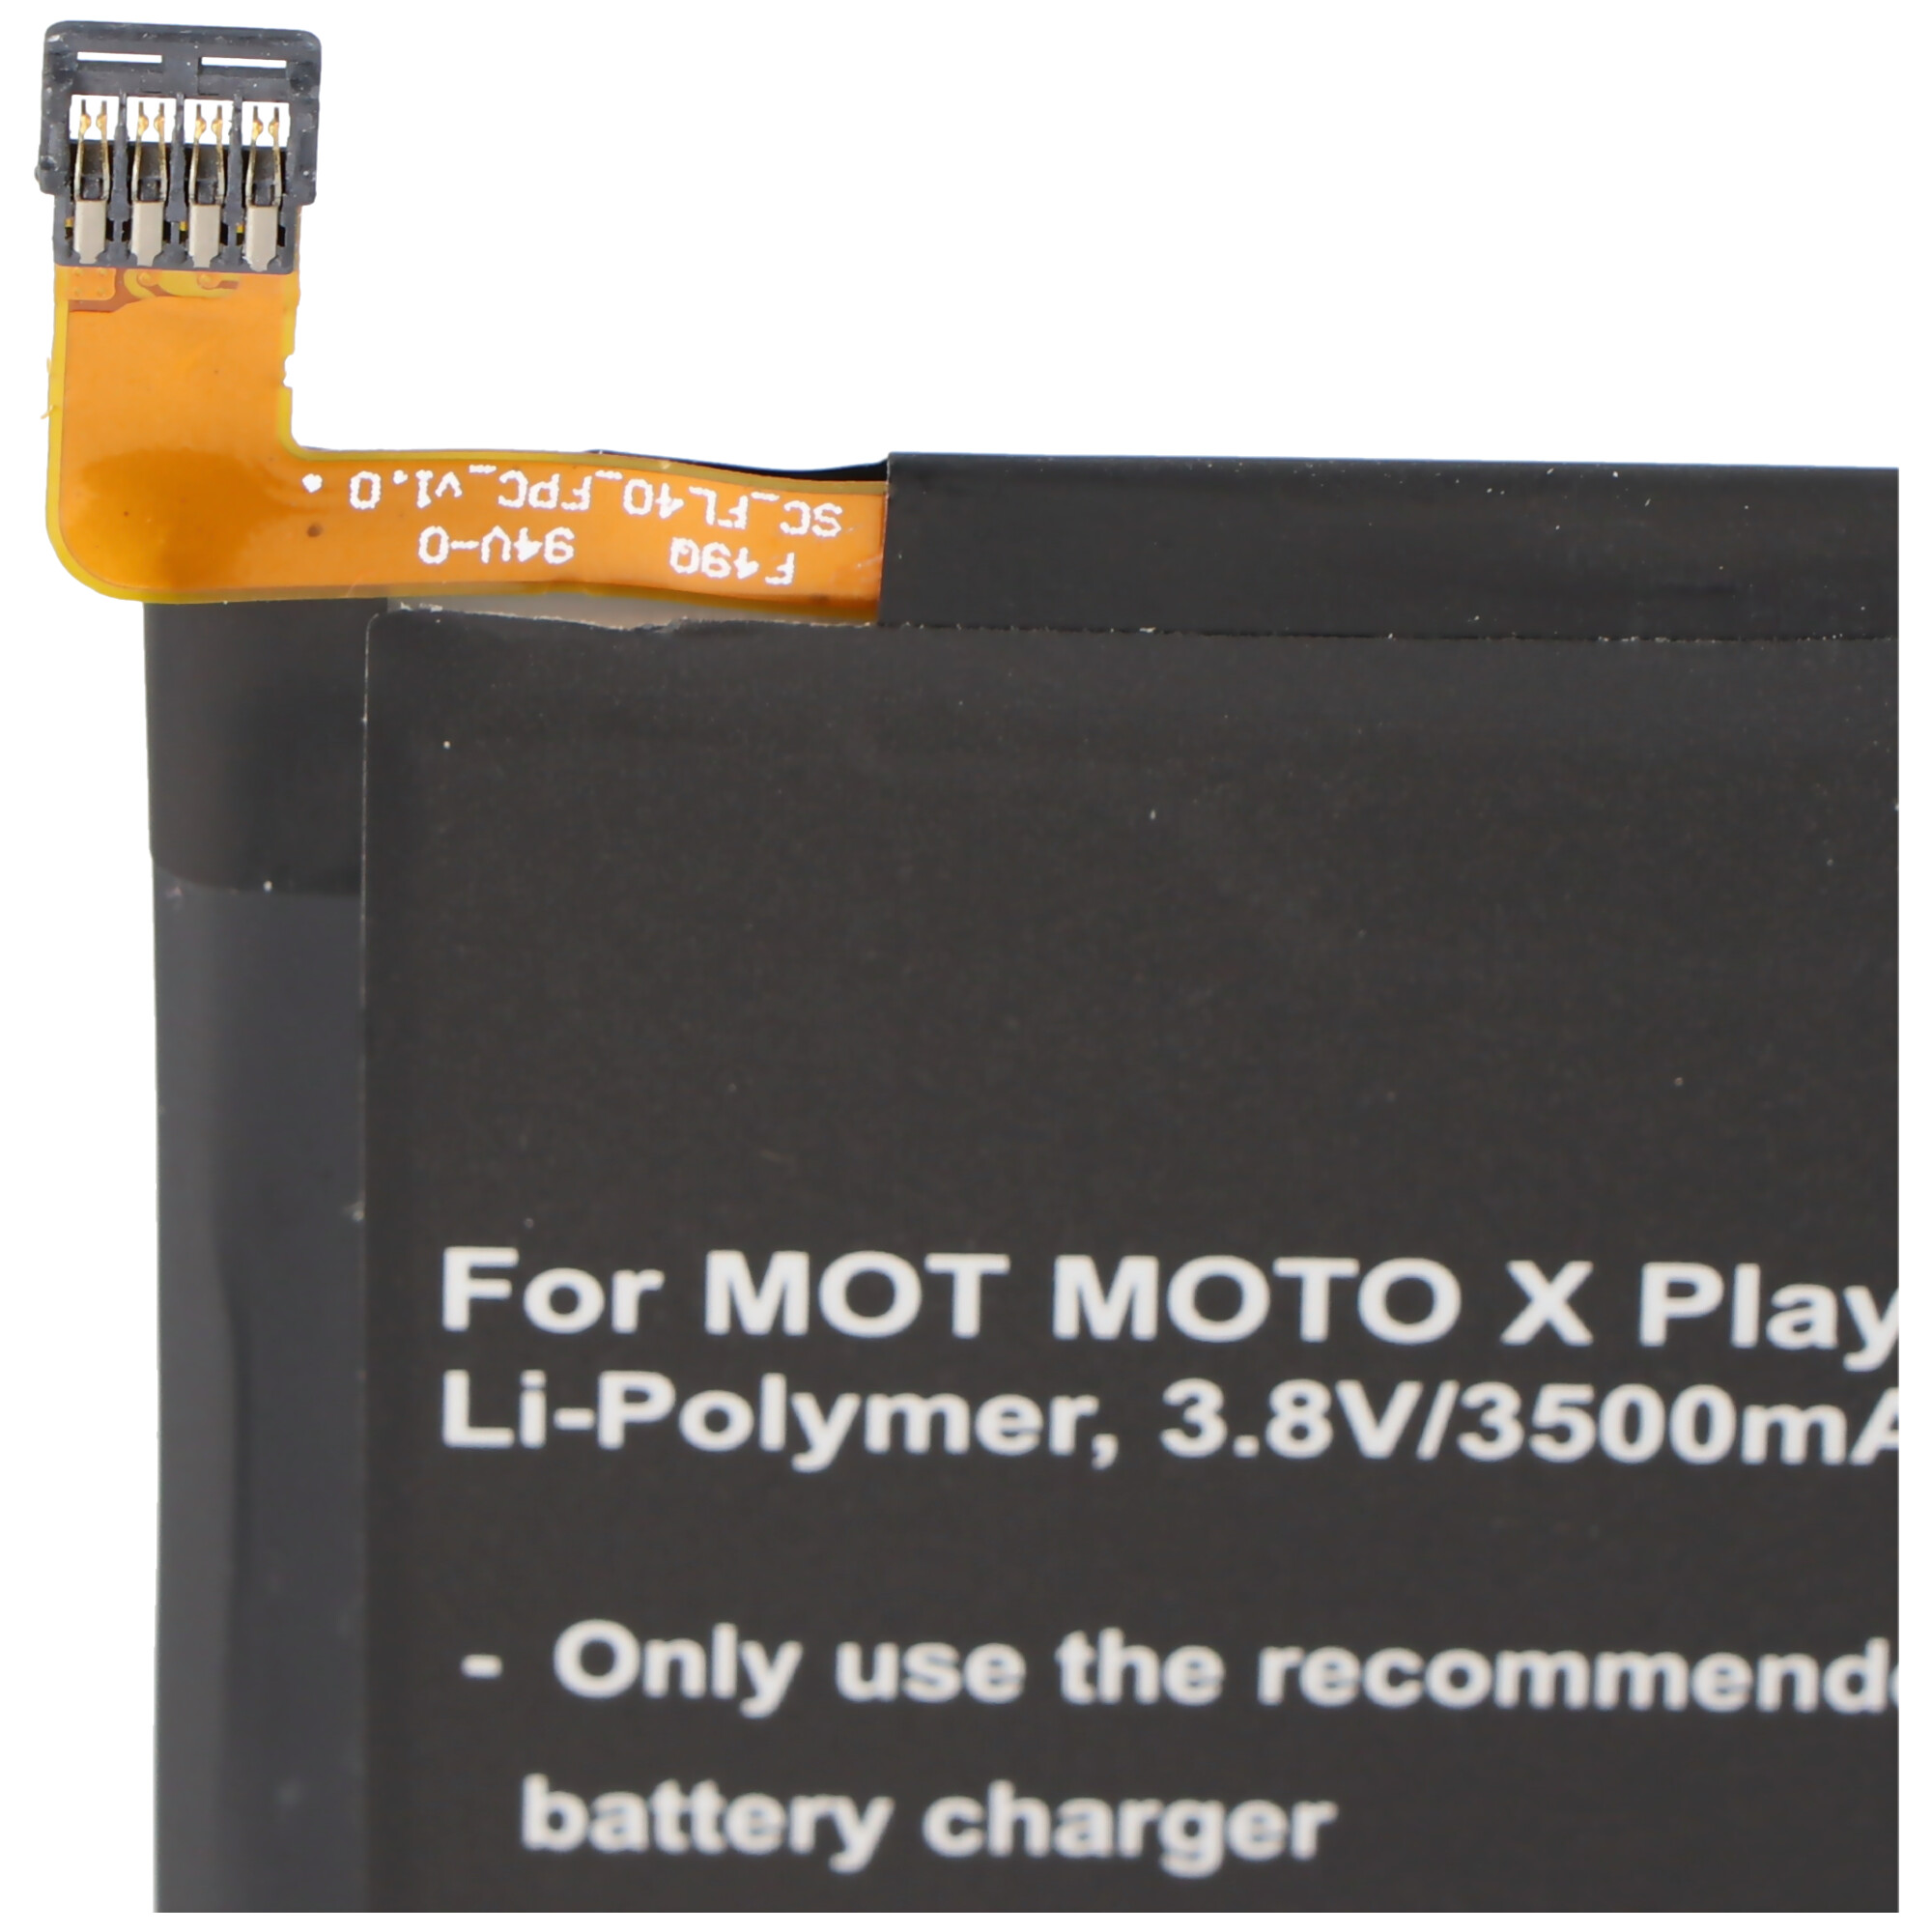 Akku passend für Motorola MOTO X Play, Li-Polymer, 3,8V, 3500mAh, 13,3Wh, built-in, ohne Werkzeug